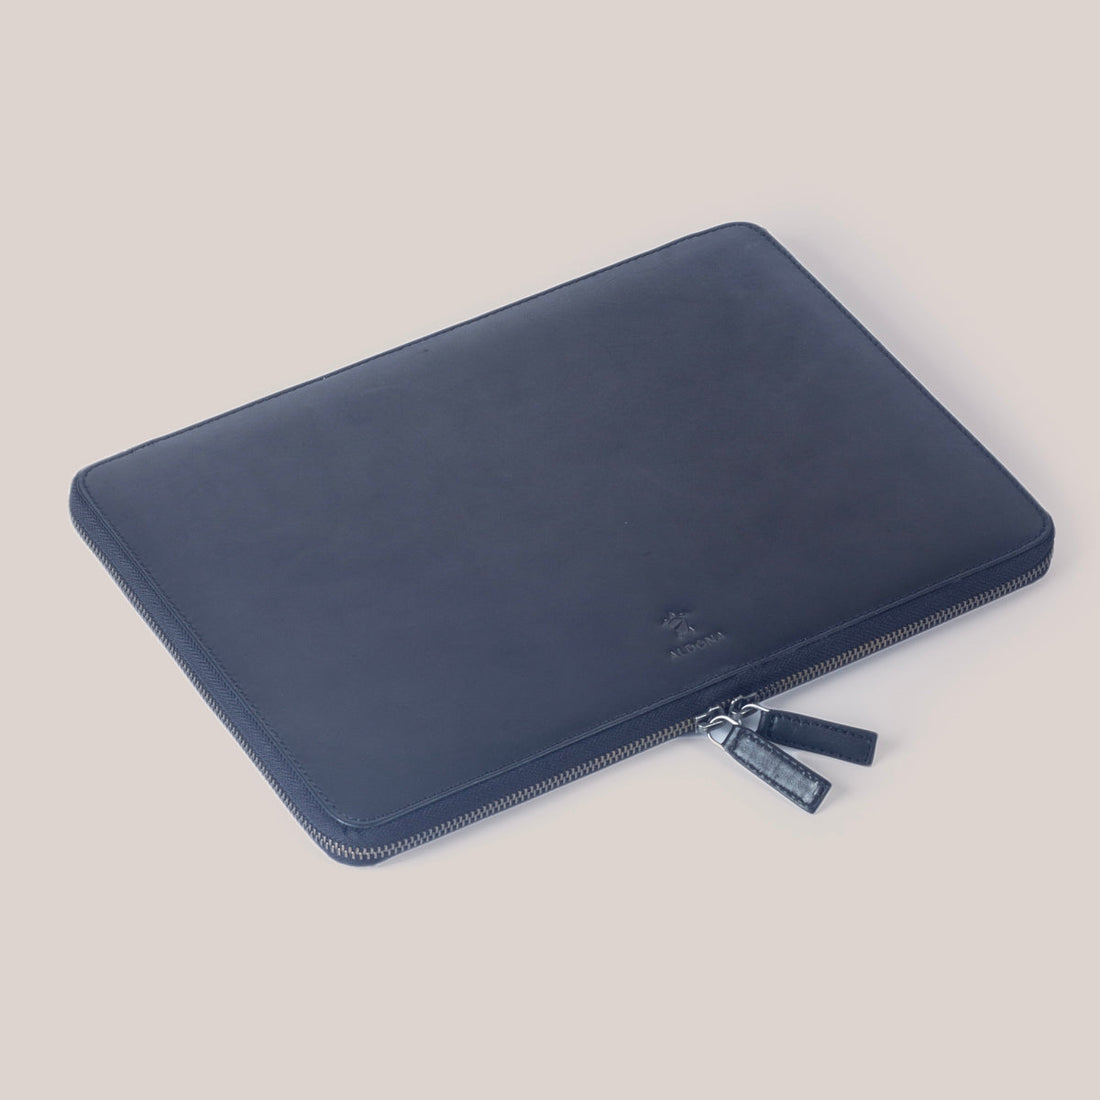 Microsoft Surface Pro 9 Zippered Laptop Case - Vintage Tan